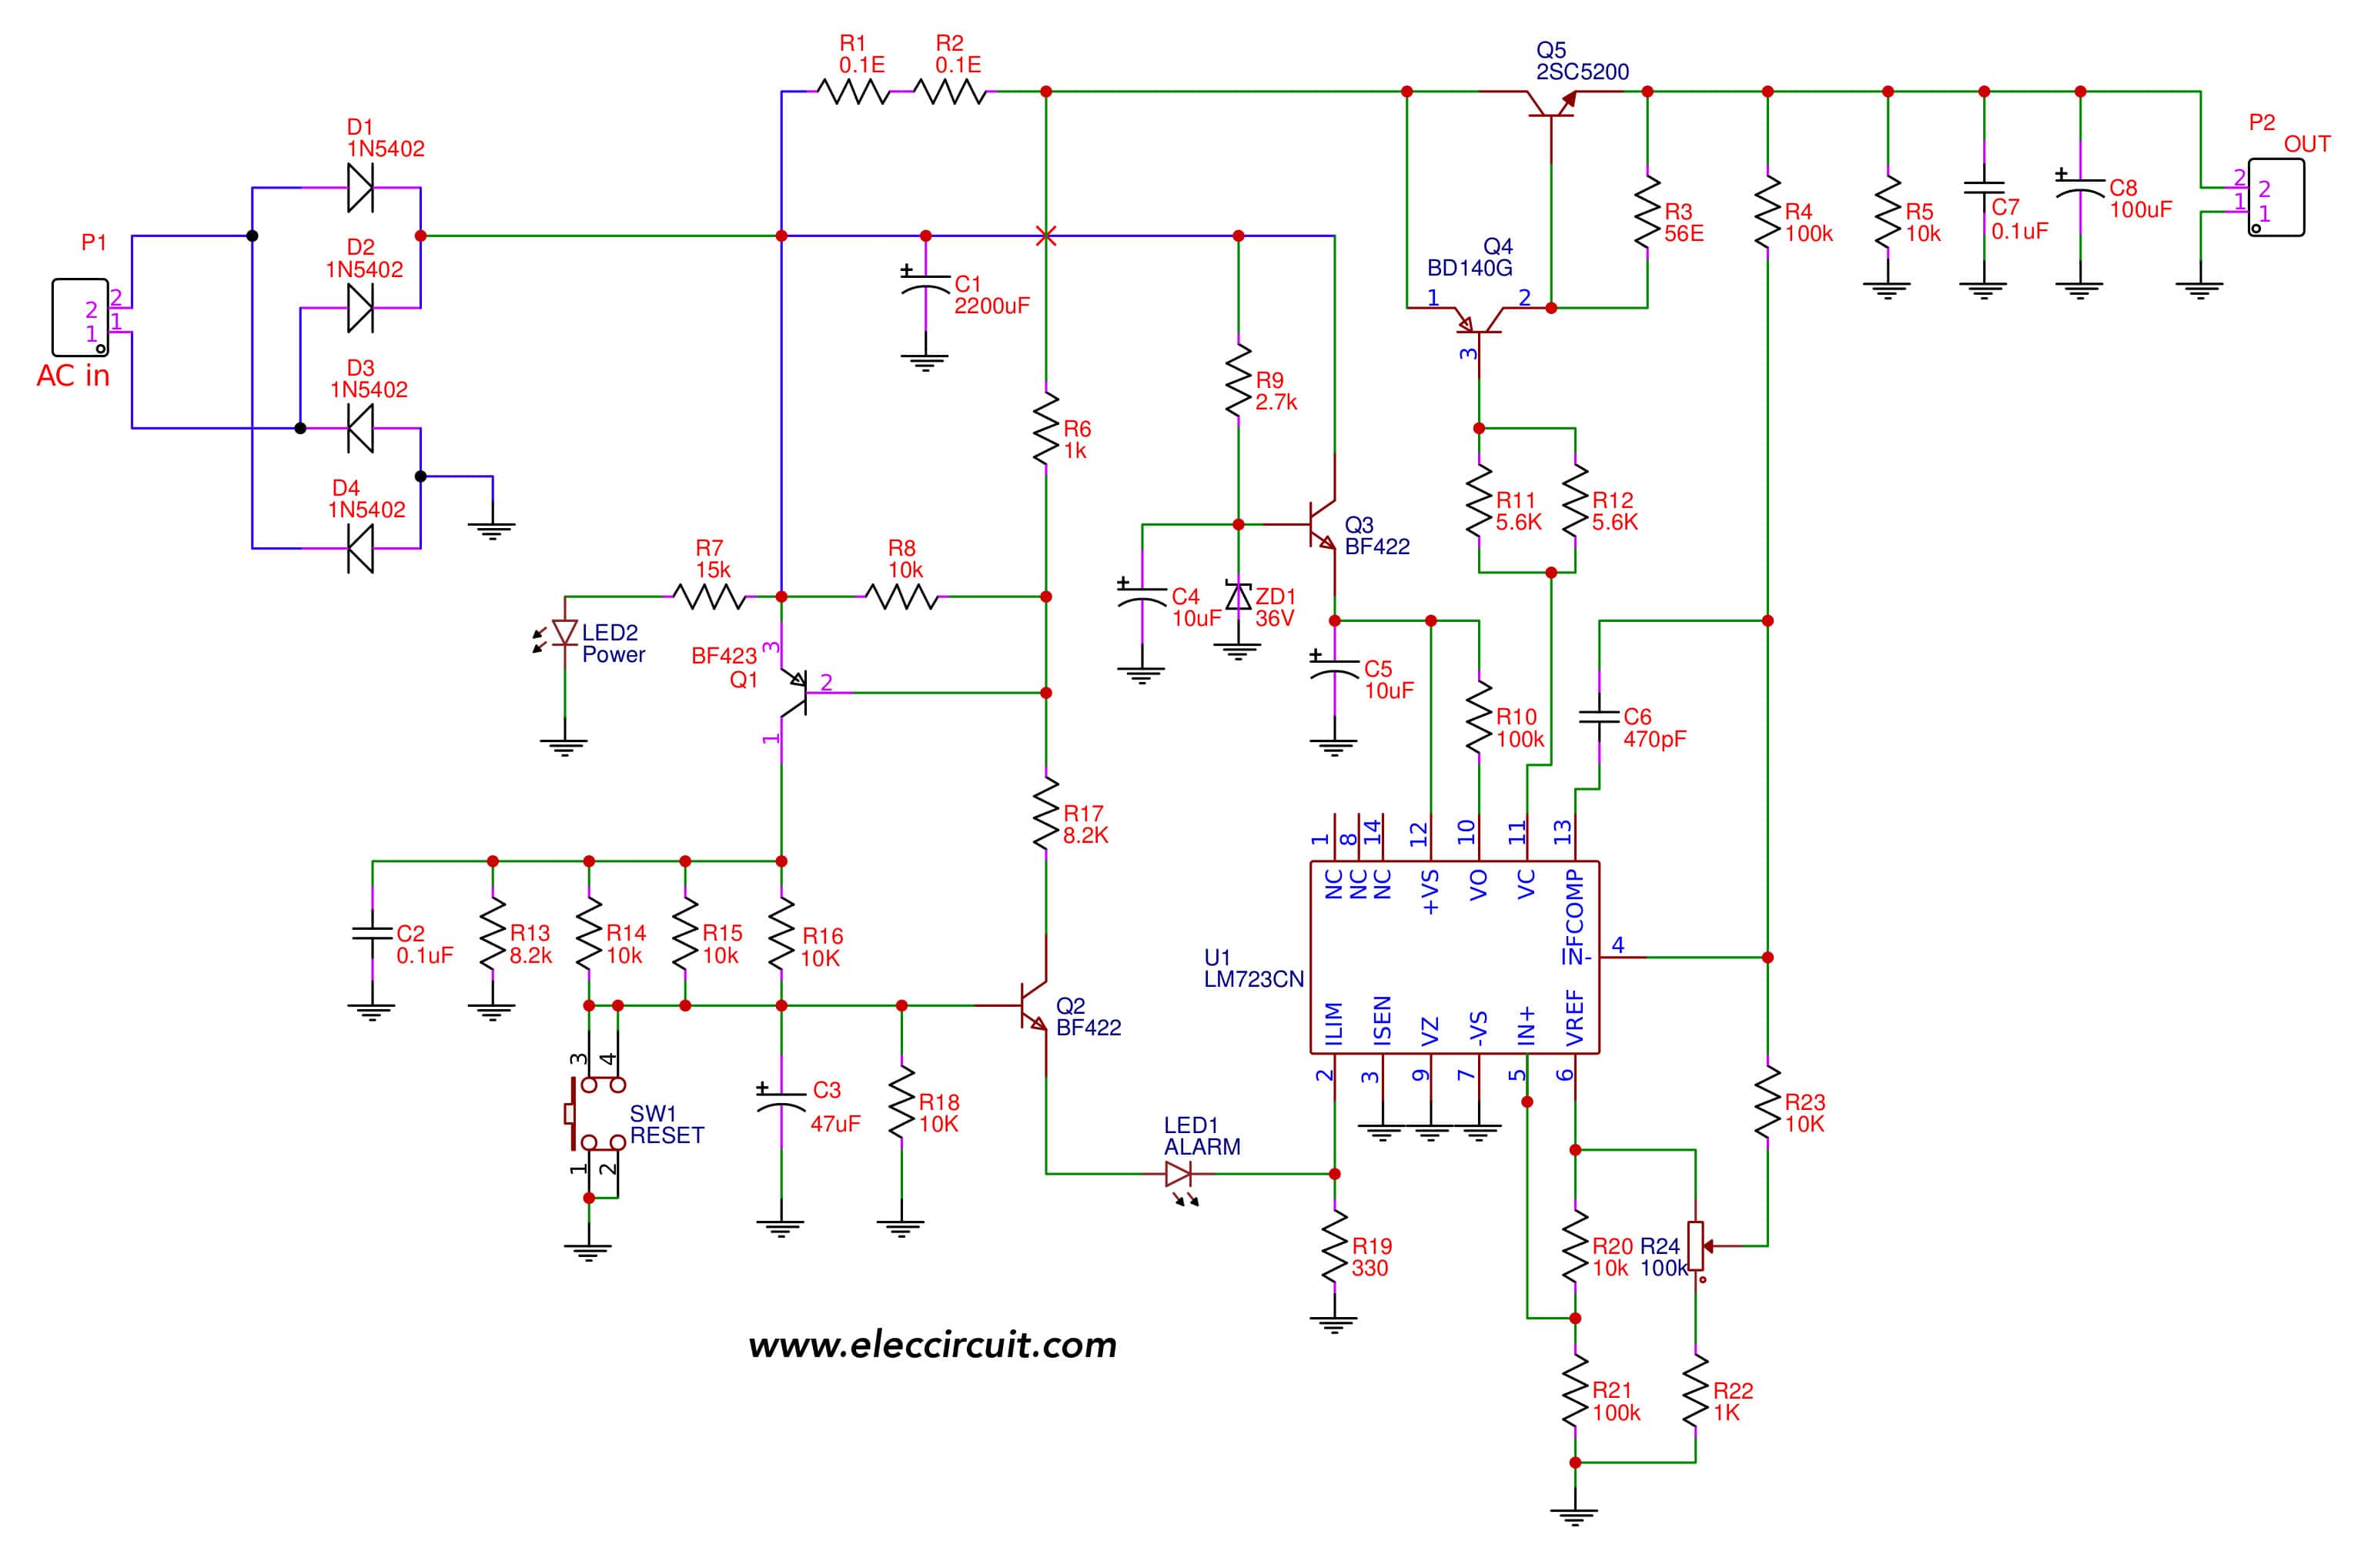 0-40V adjustable voltage regulator at 1A | ElecCircuit.com